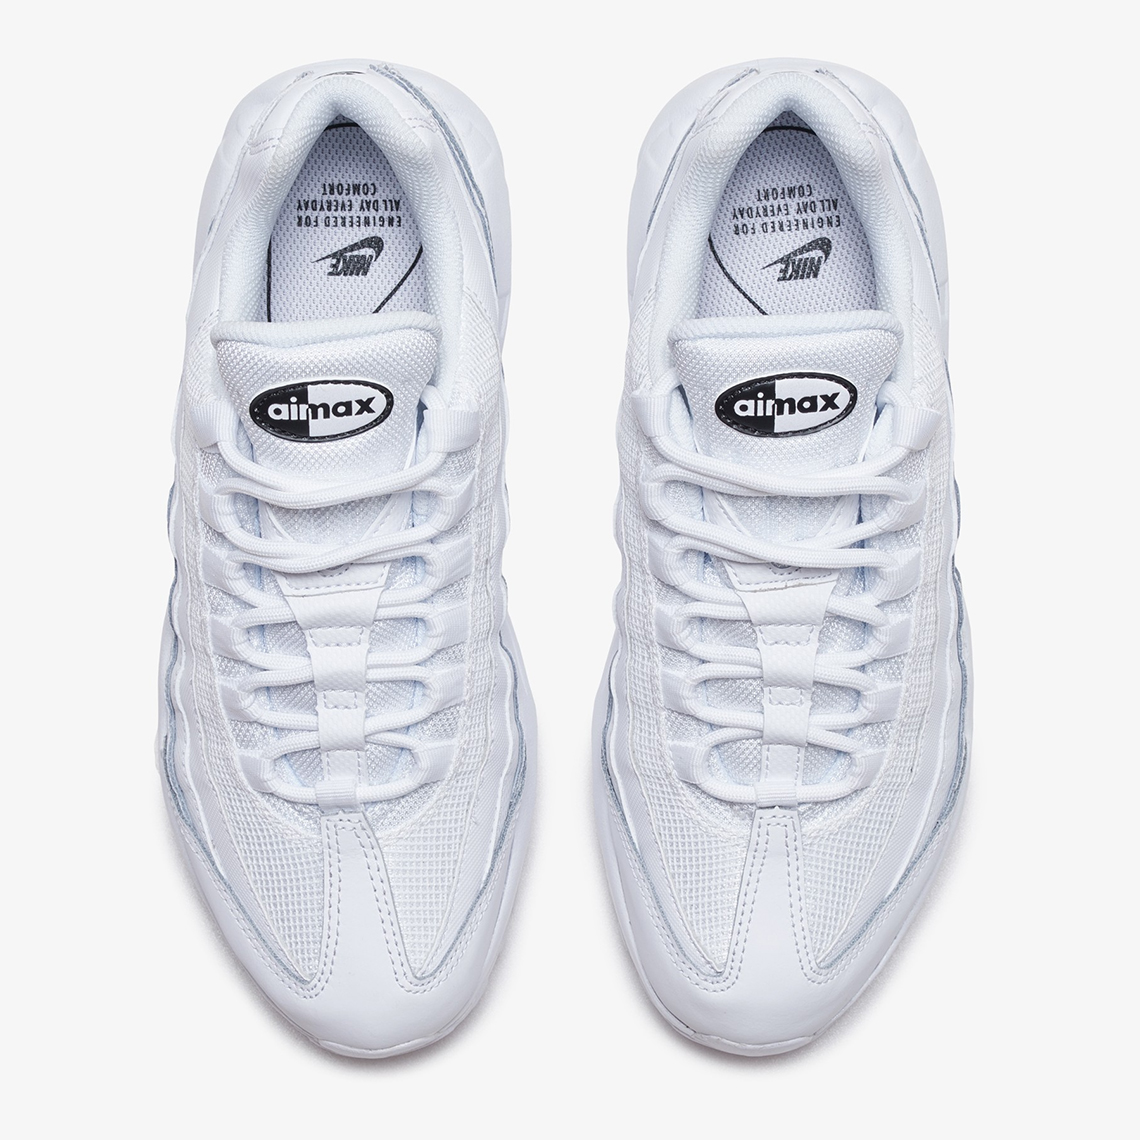 Nike Air Max 95 White Black CK7070-100 | SneakerNews.com